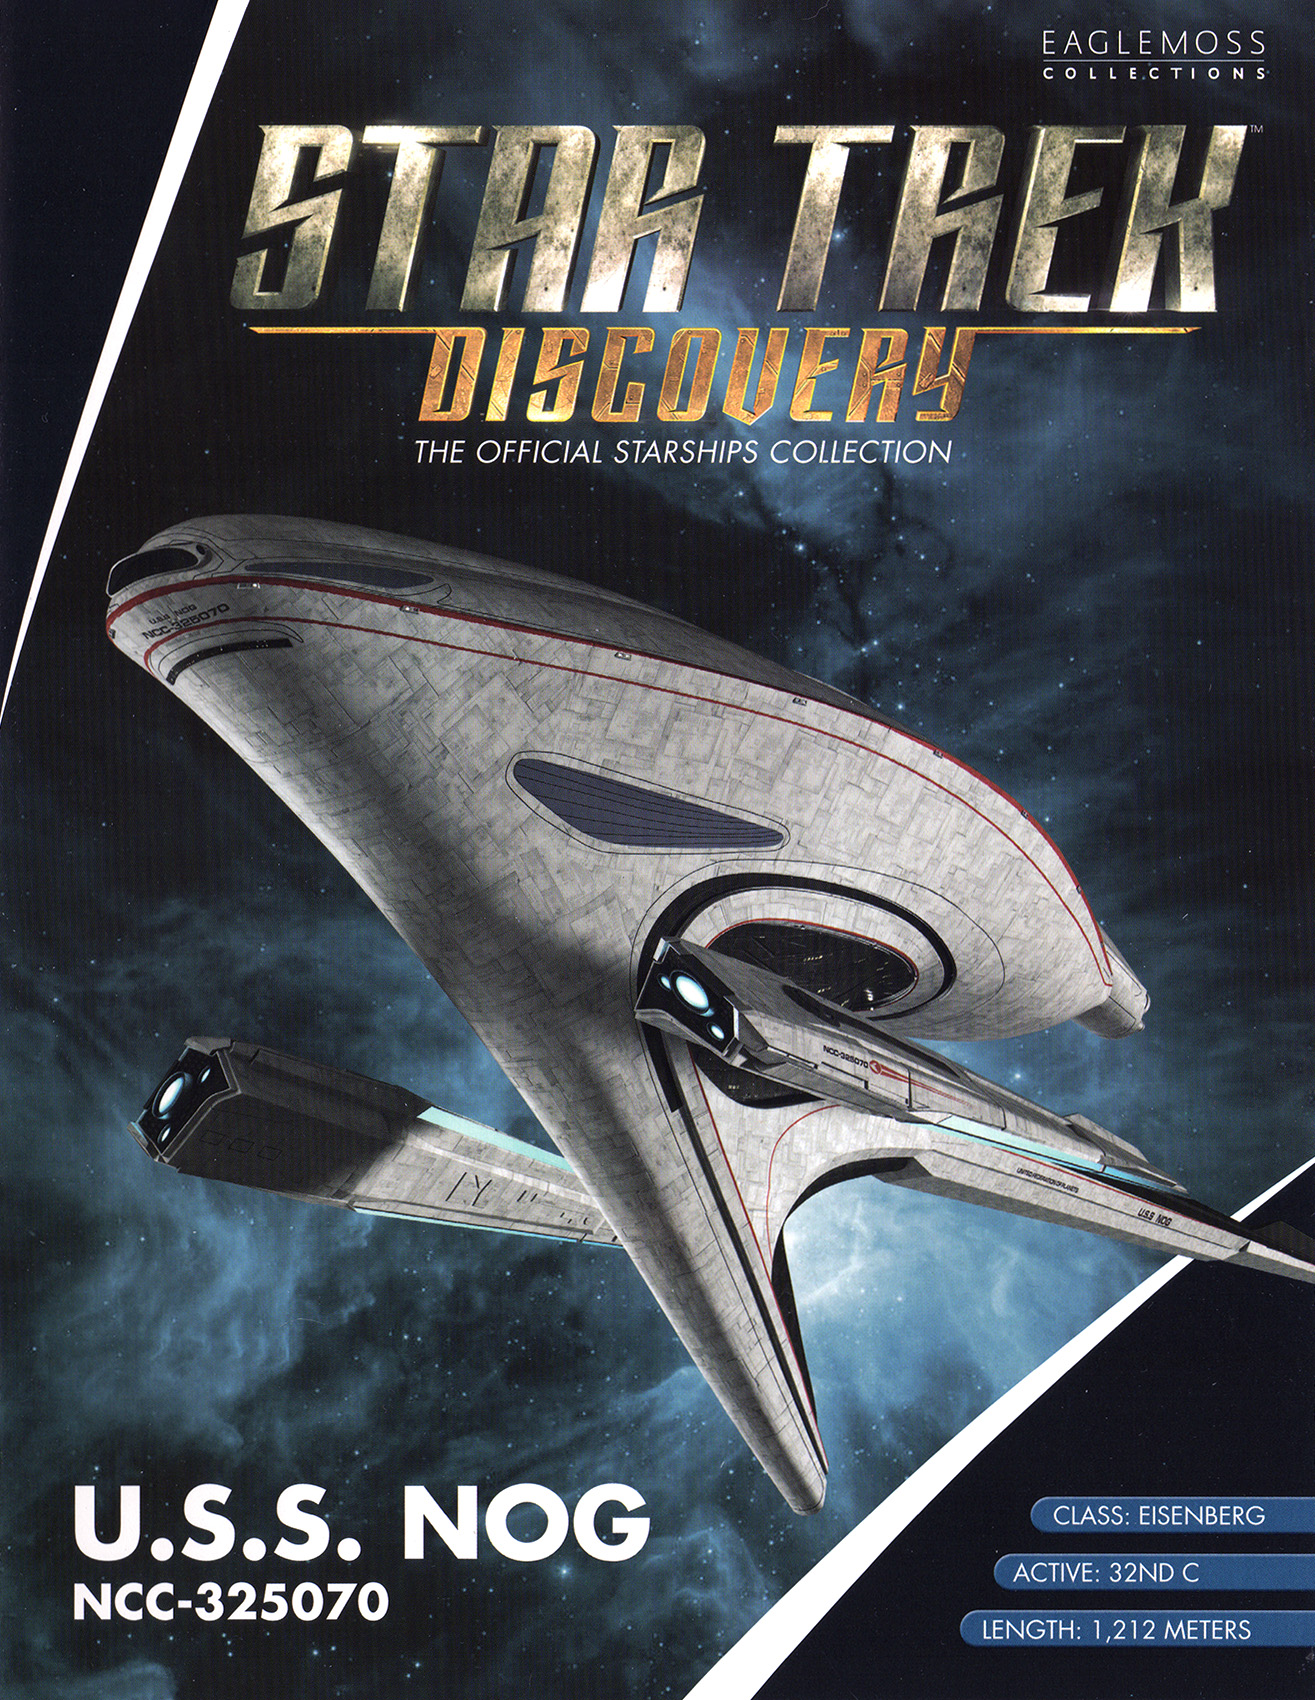 Eaglemoss Star Trek Starships Discovery Universe Issue 14